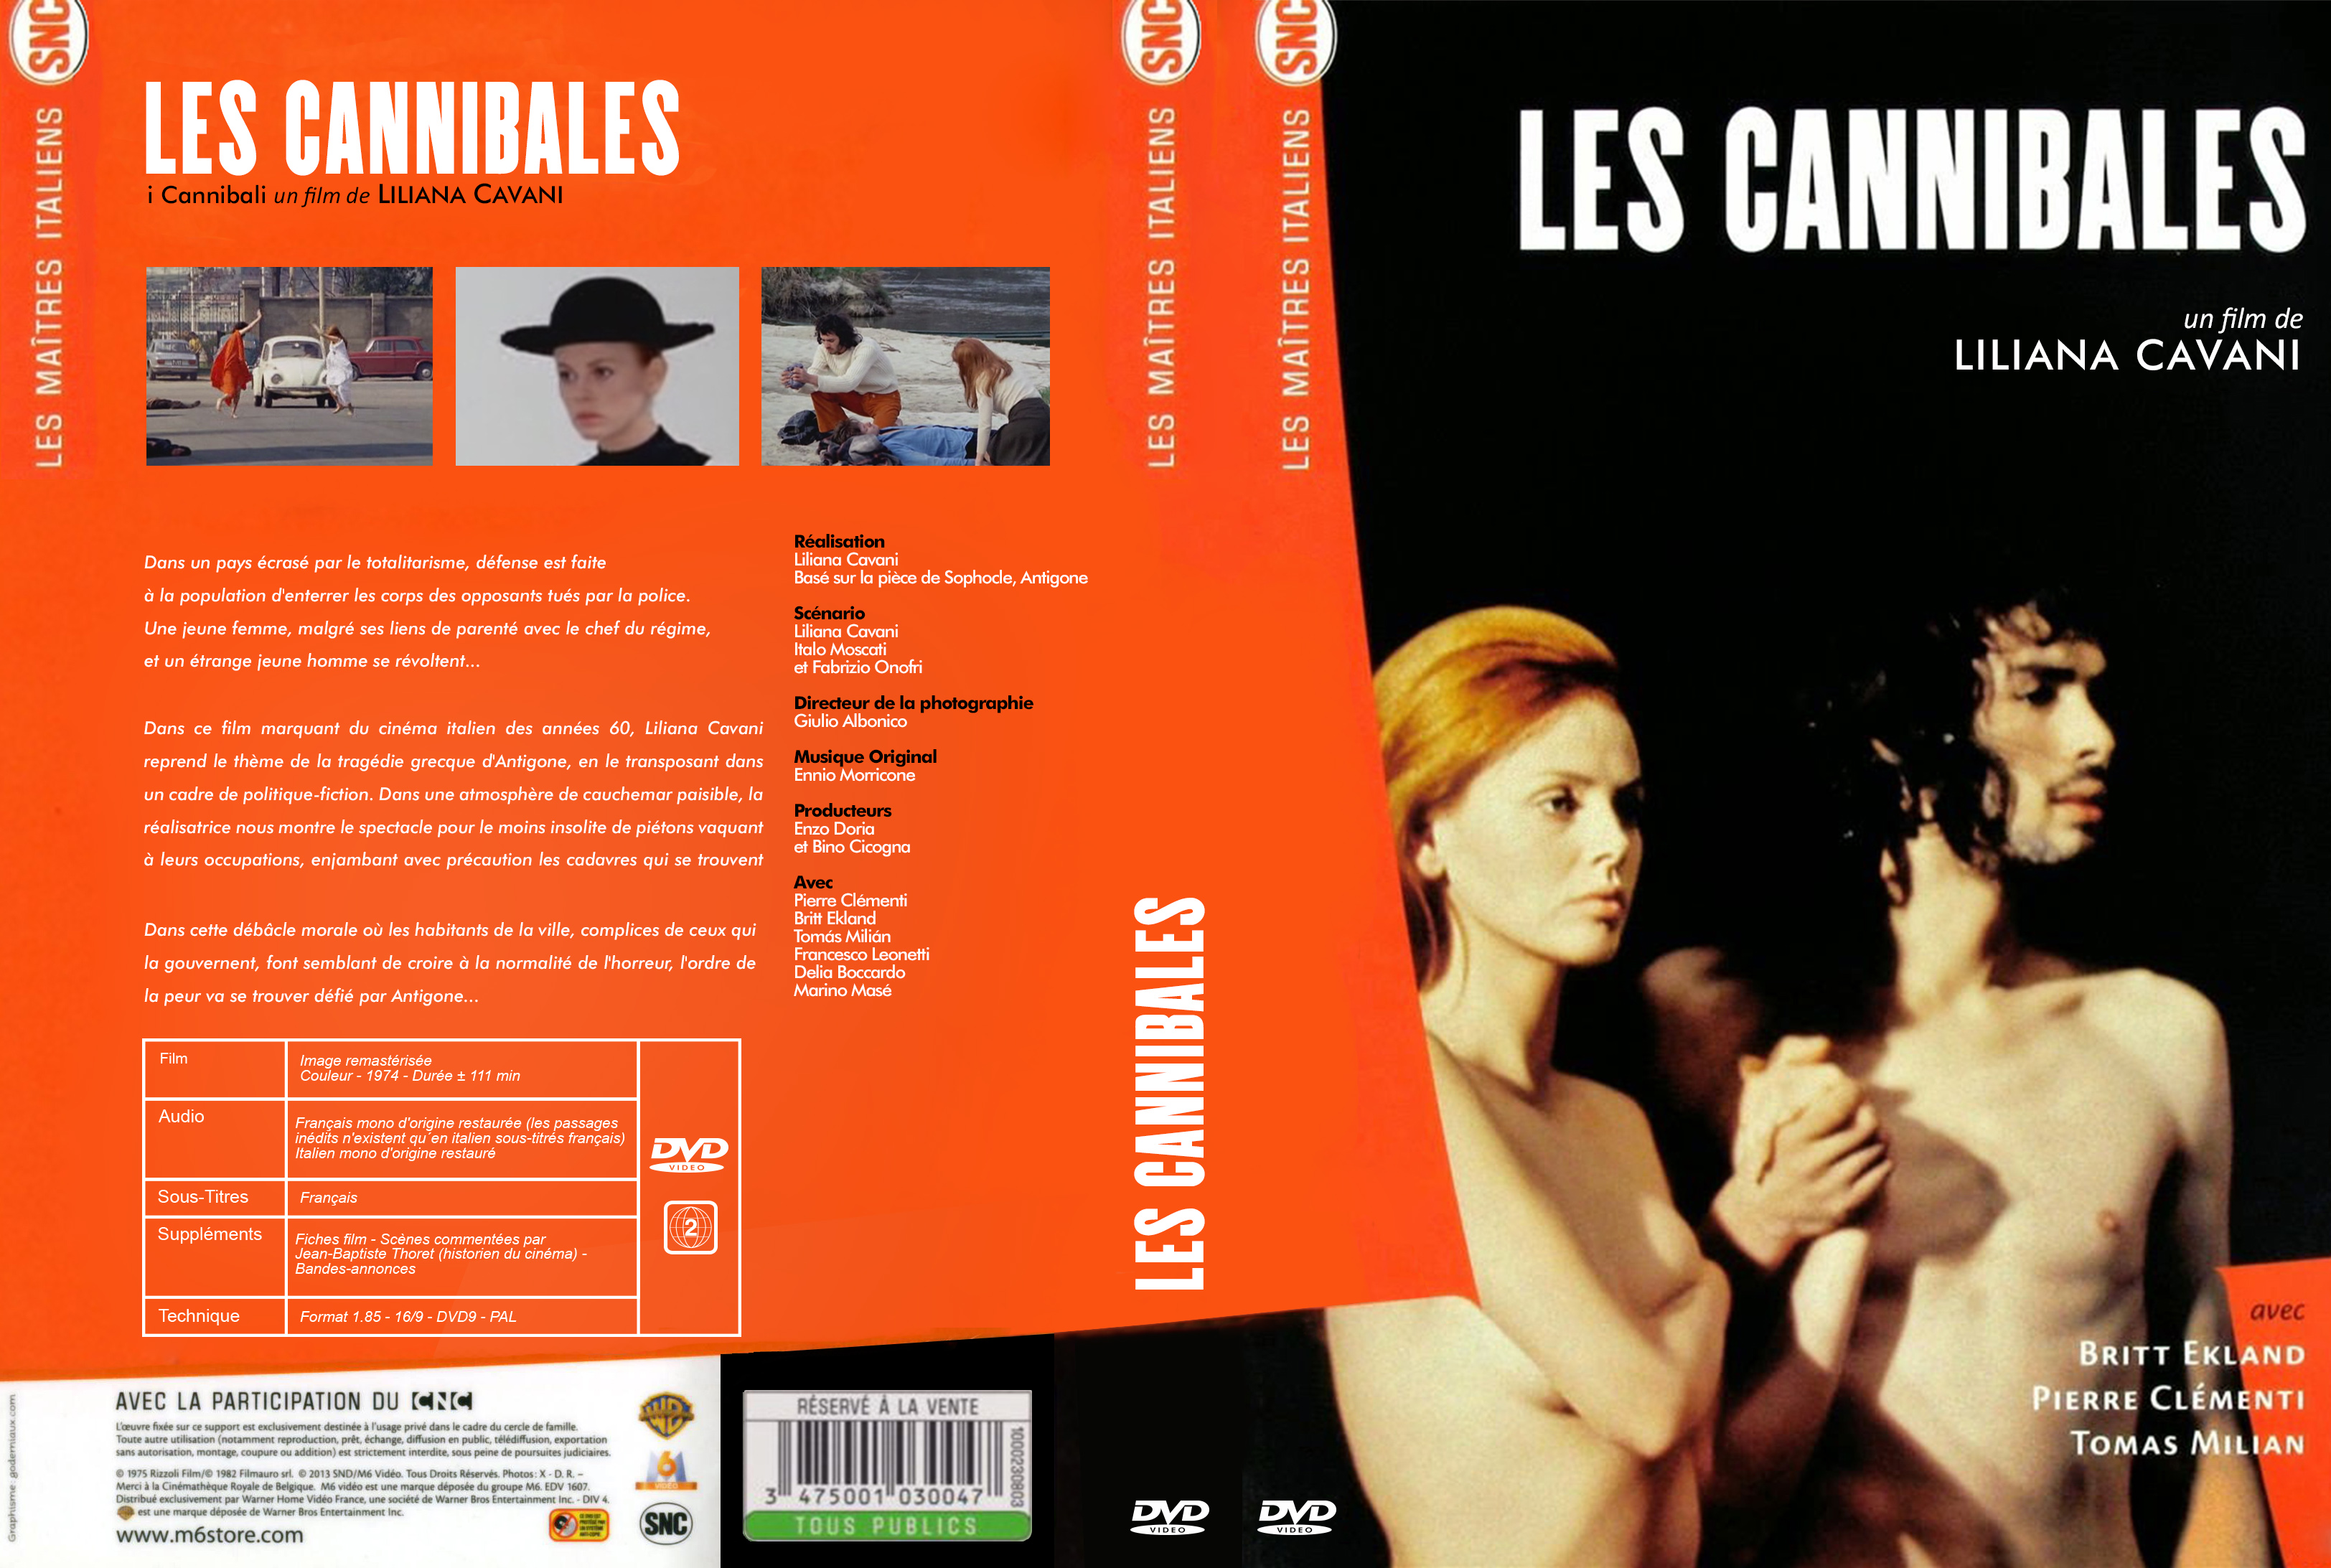 Jaquette DVD Les cannibales custom